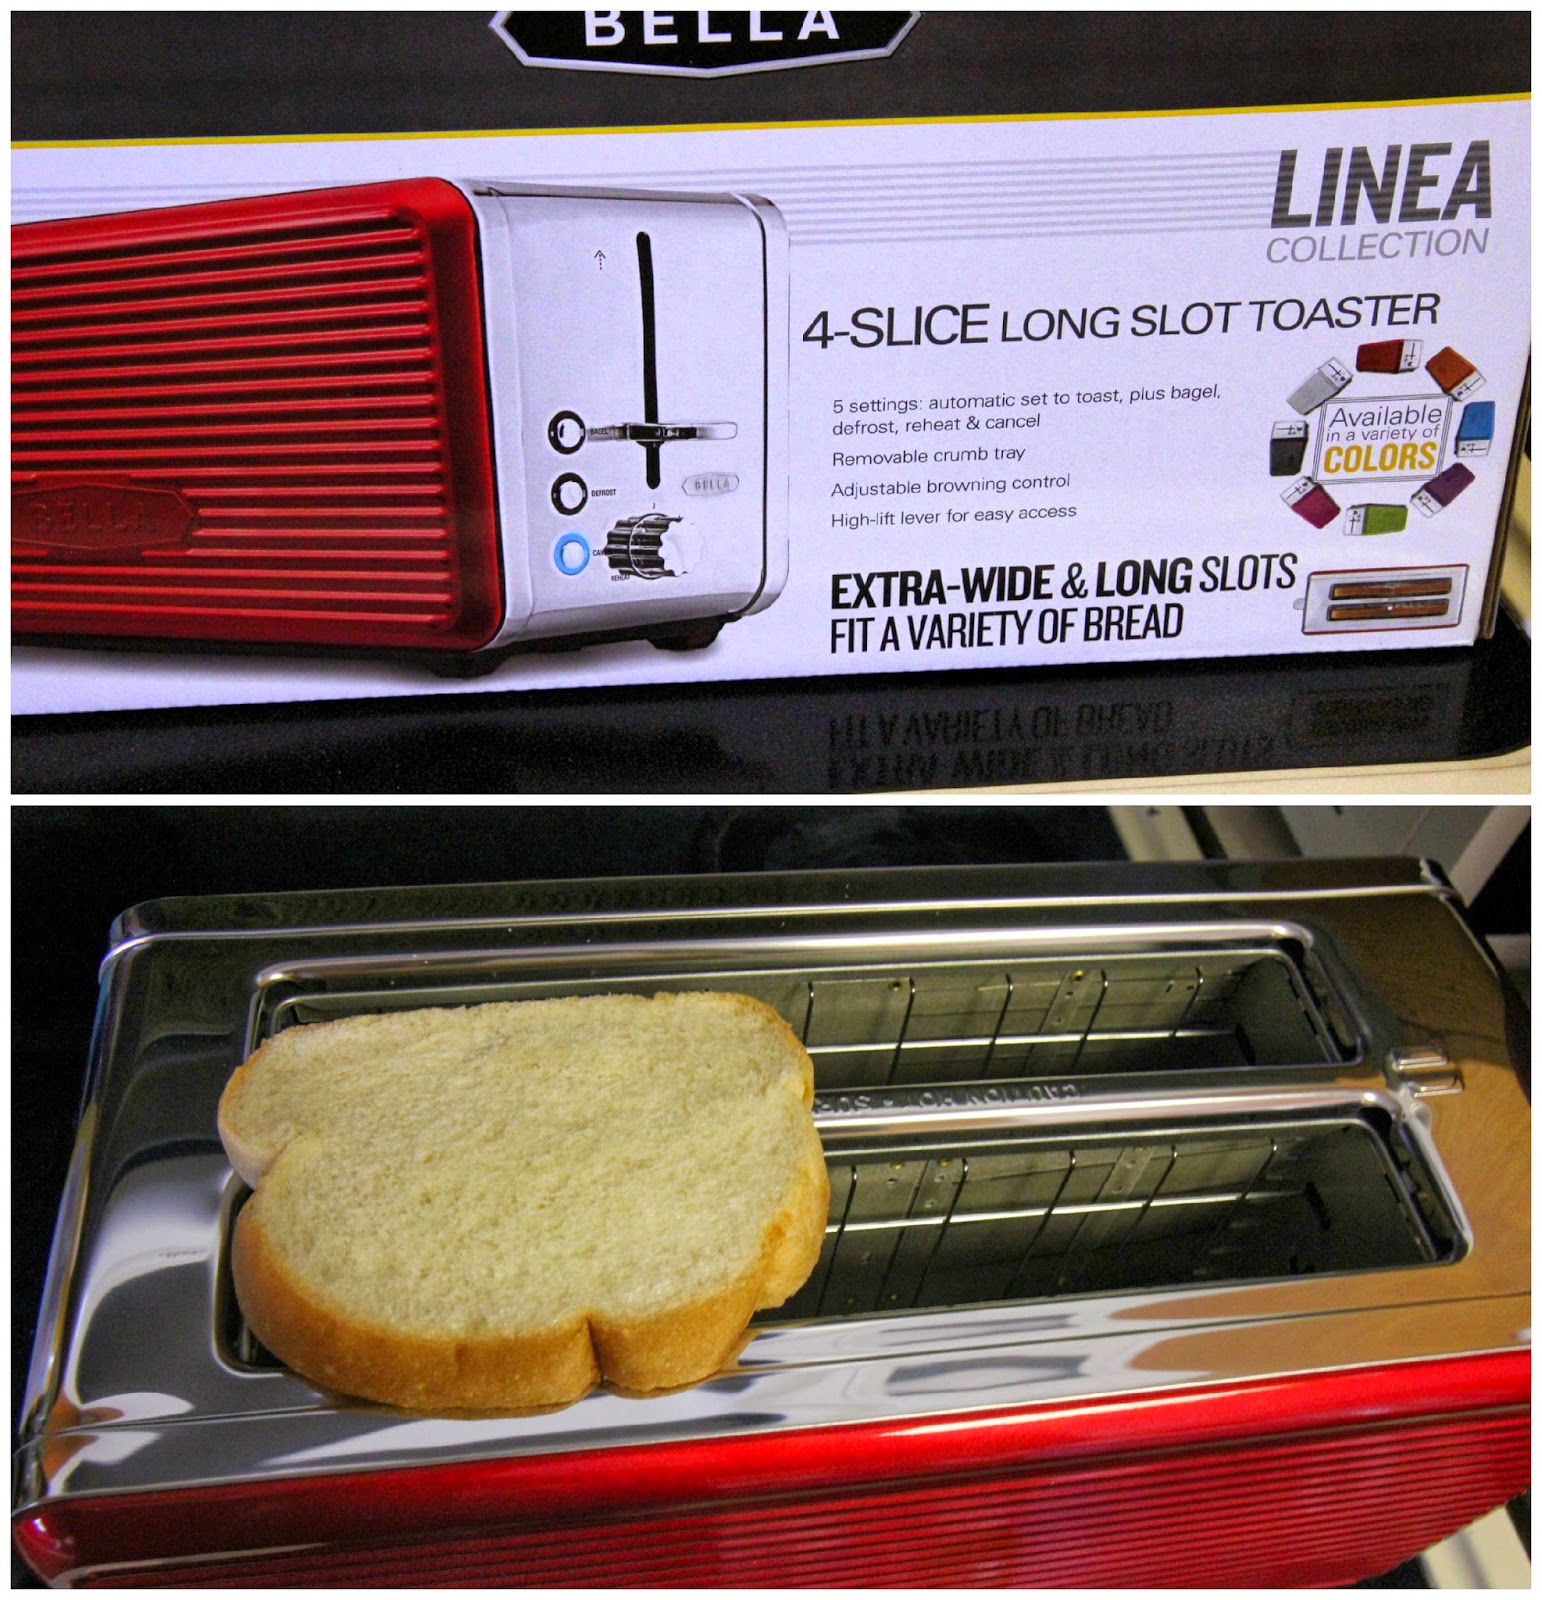 Bella Linea Collection 5 QT Programmable Slow Cooker 